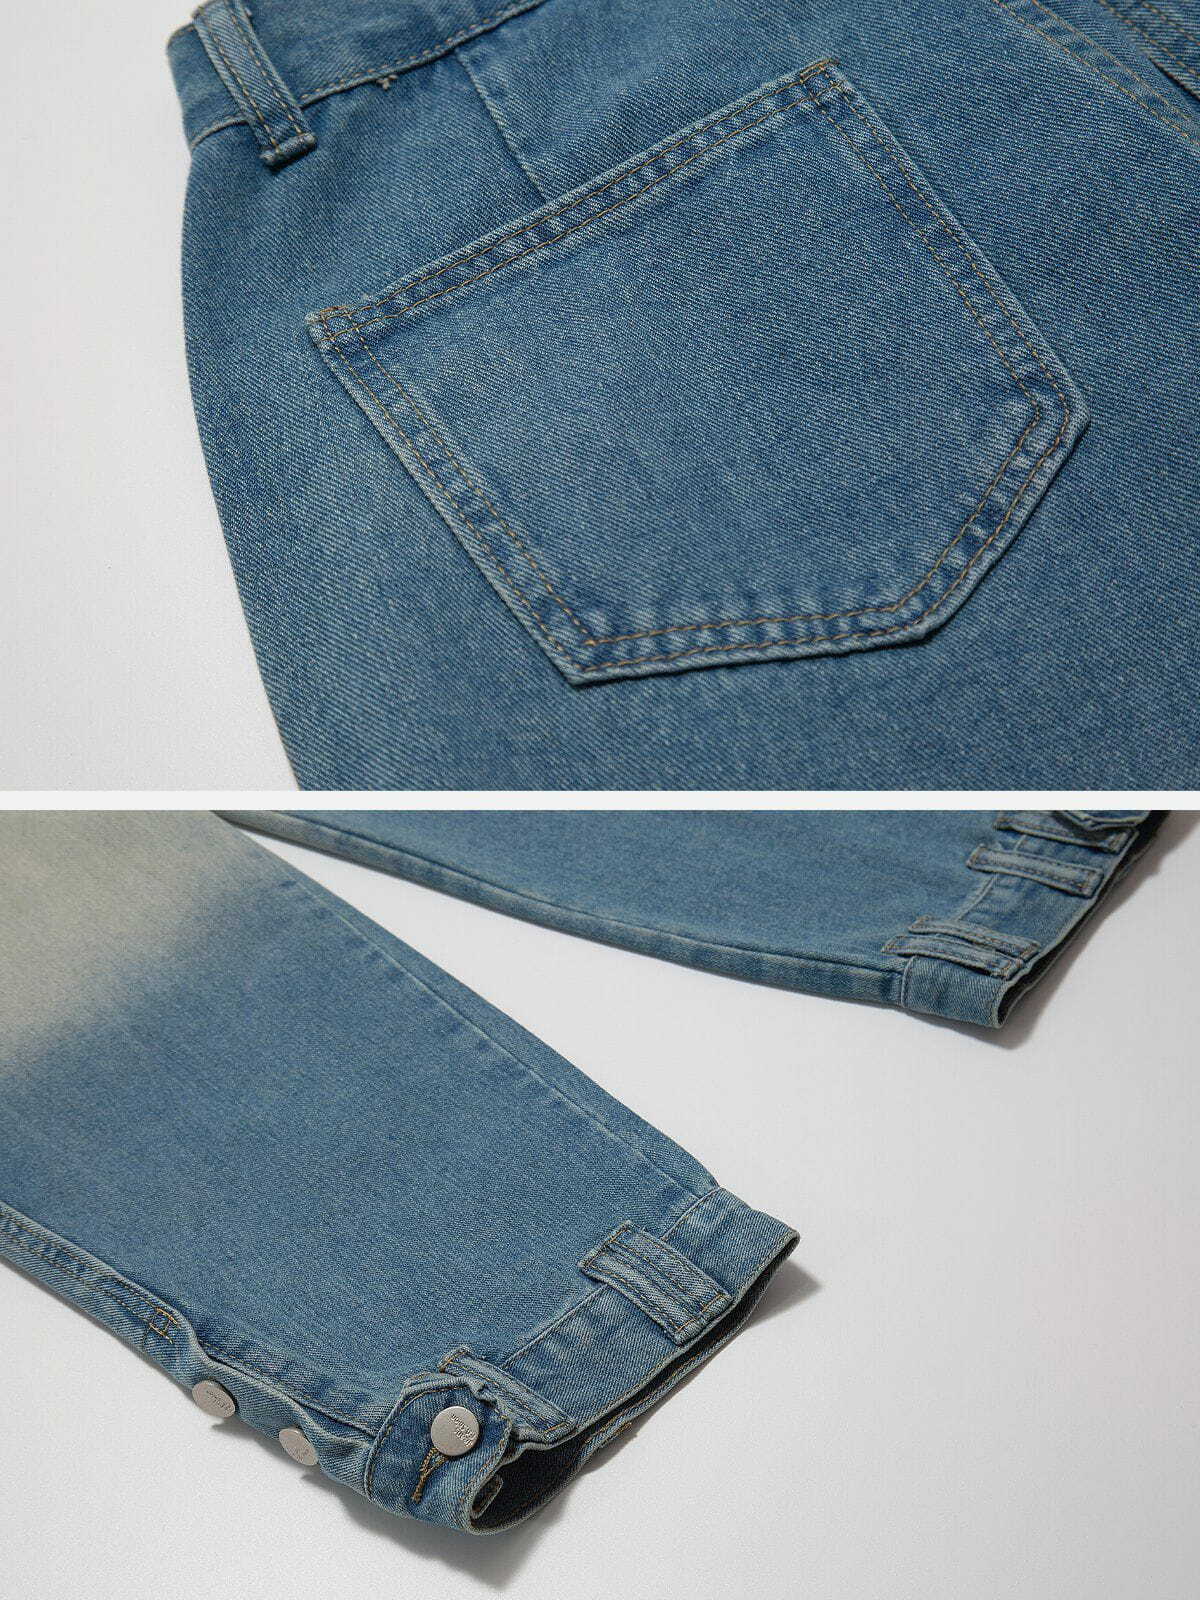 patchwork gradient jeans retro urban chic 3517